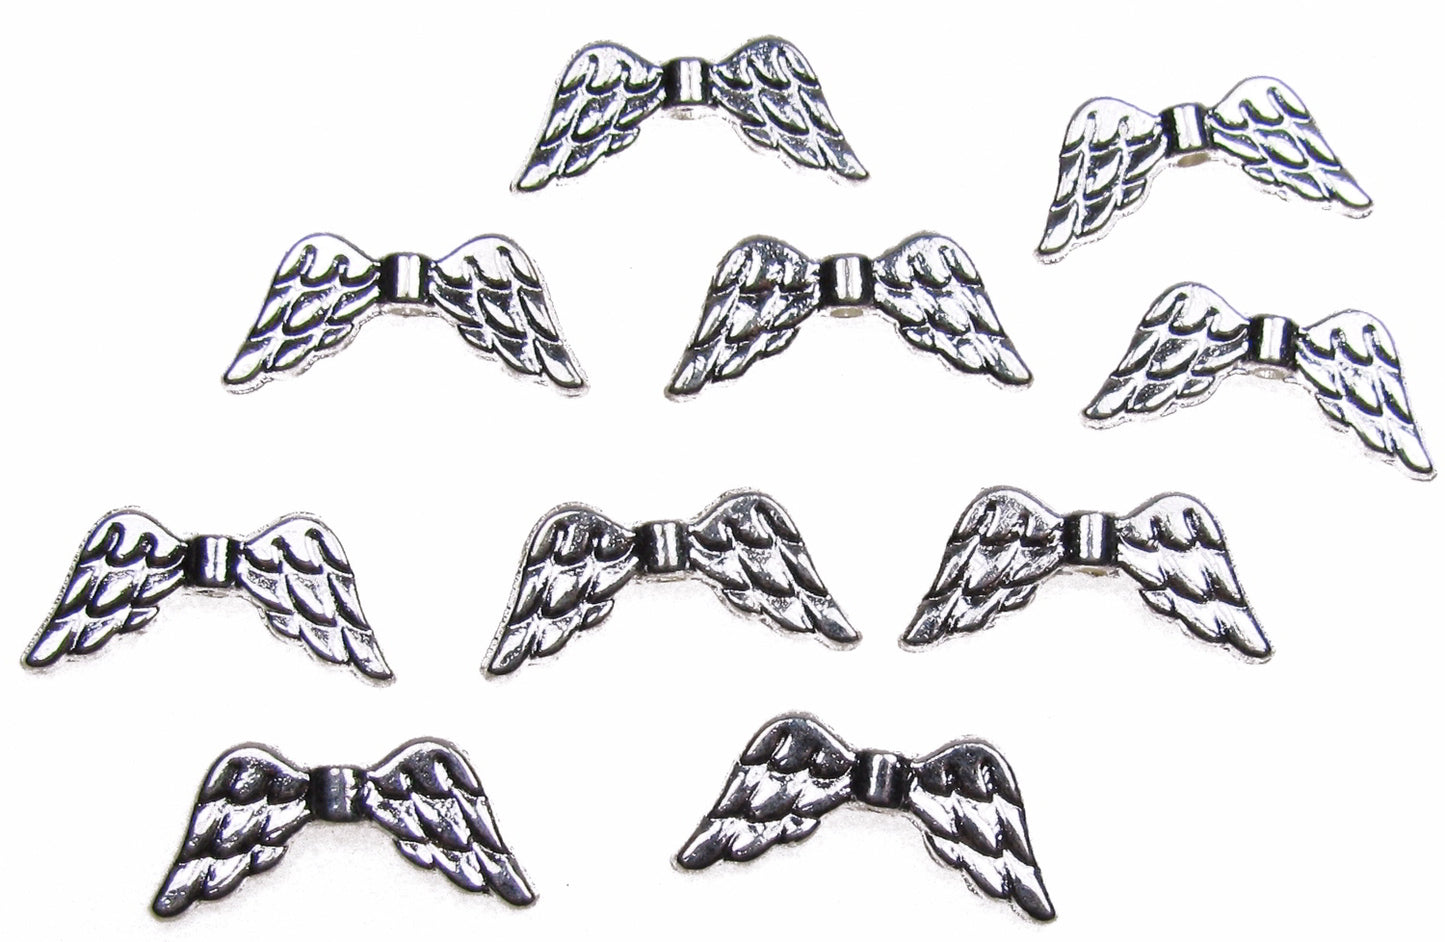 10 Metallperlen Flügel in silber hell, 1,95 cm Schutzengel mit Perlen basteln